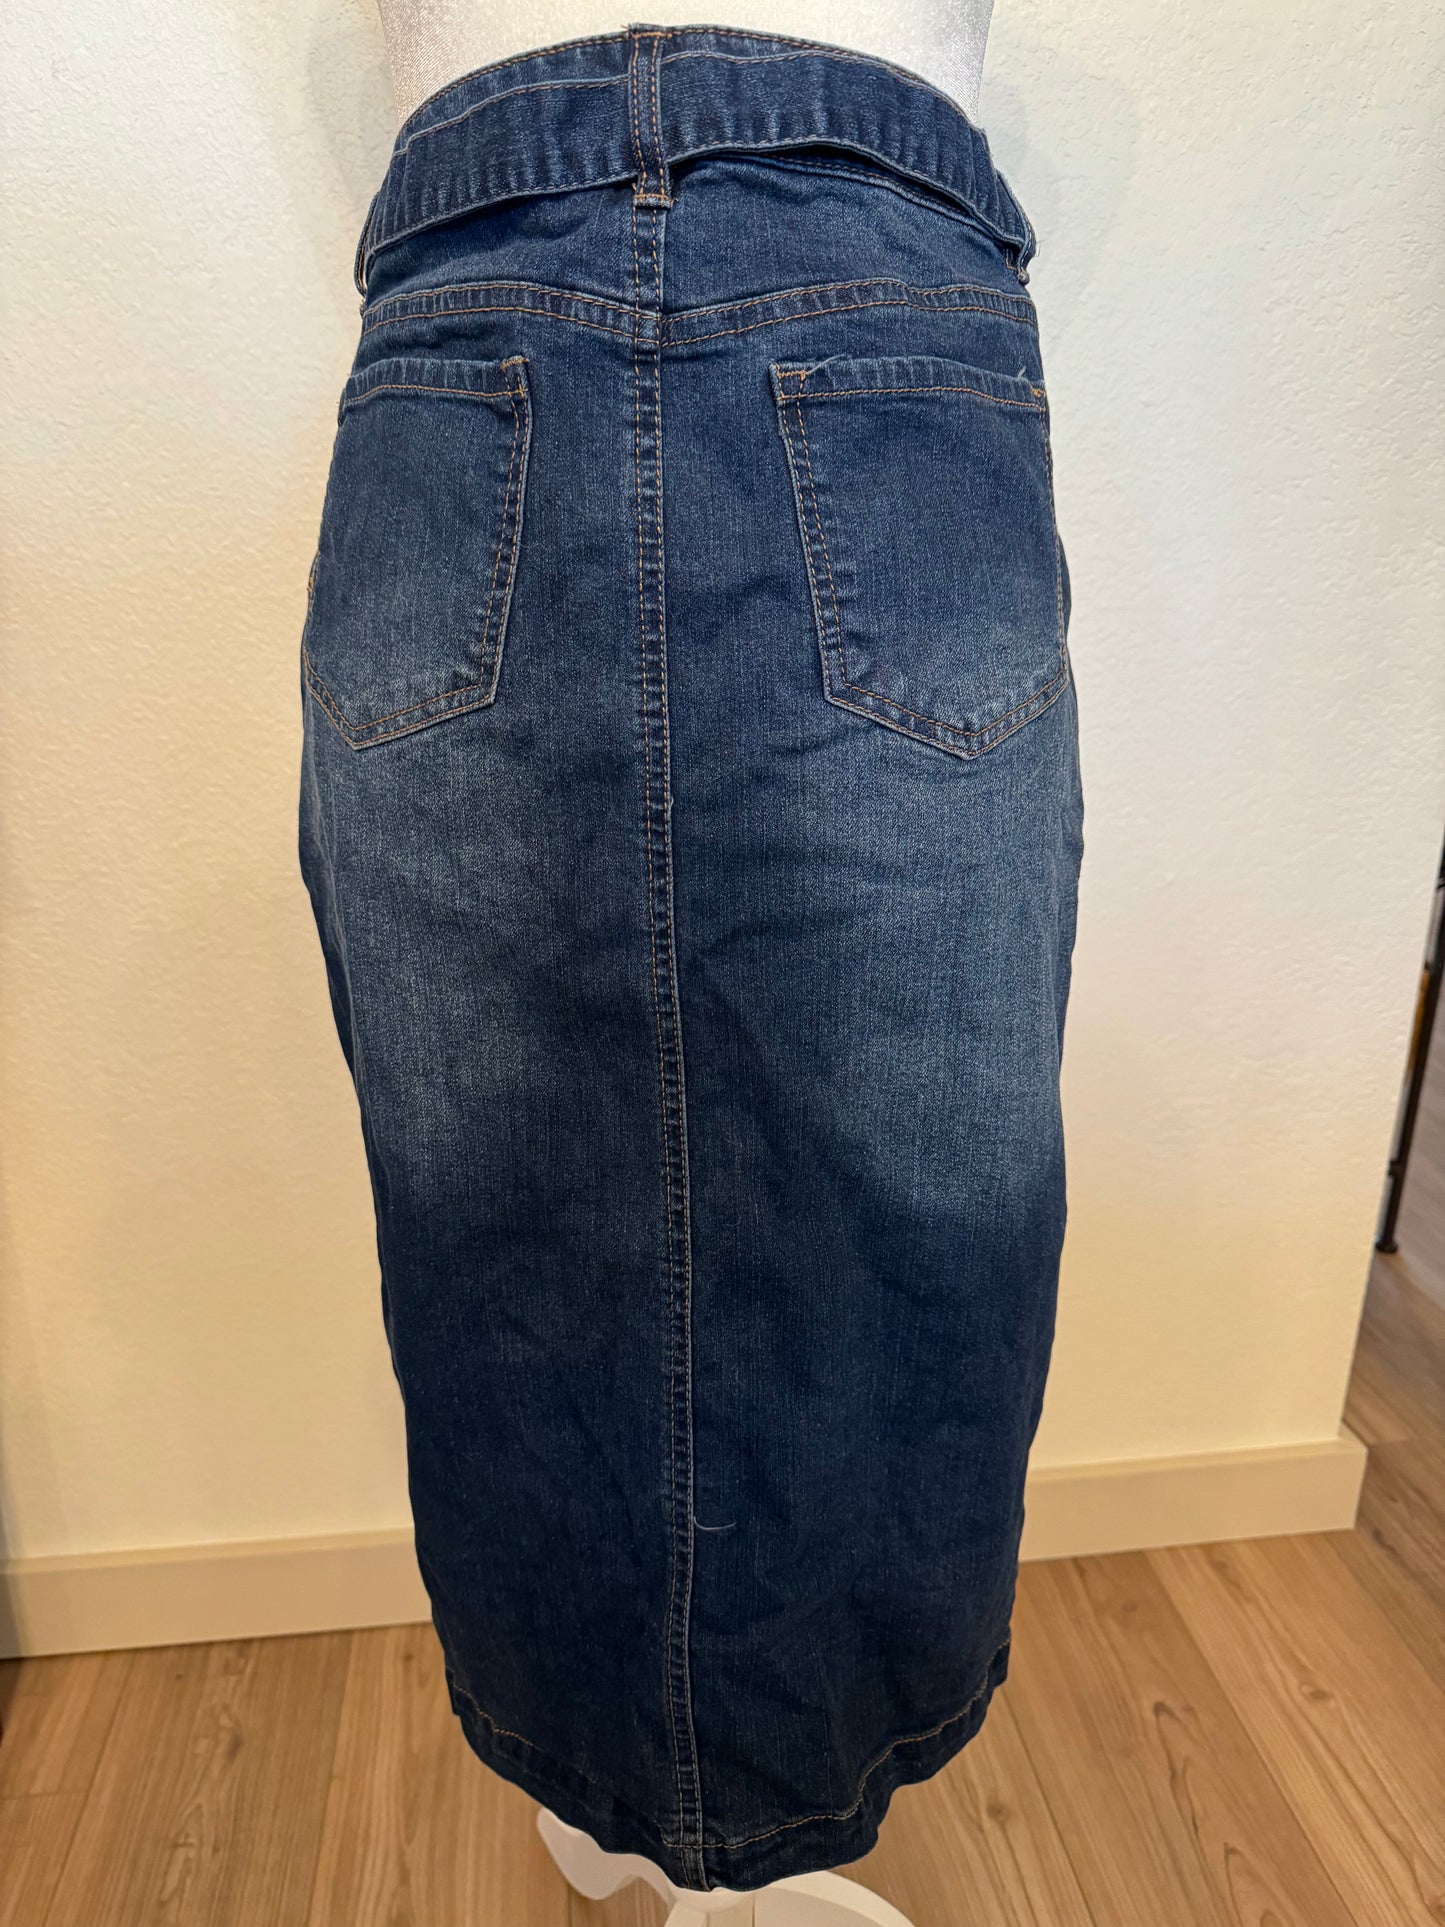 D. Jeans Button Front Denim Skirt